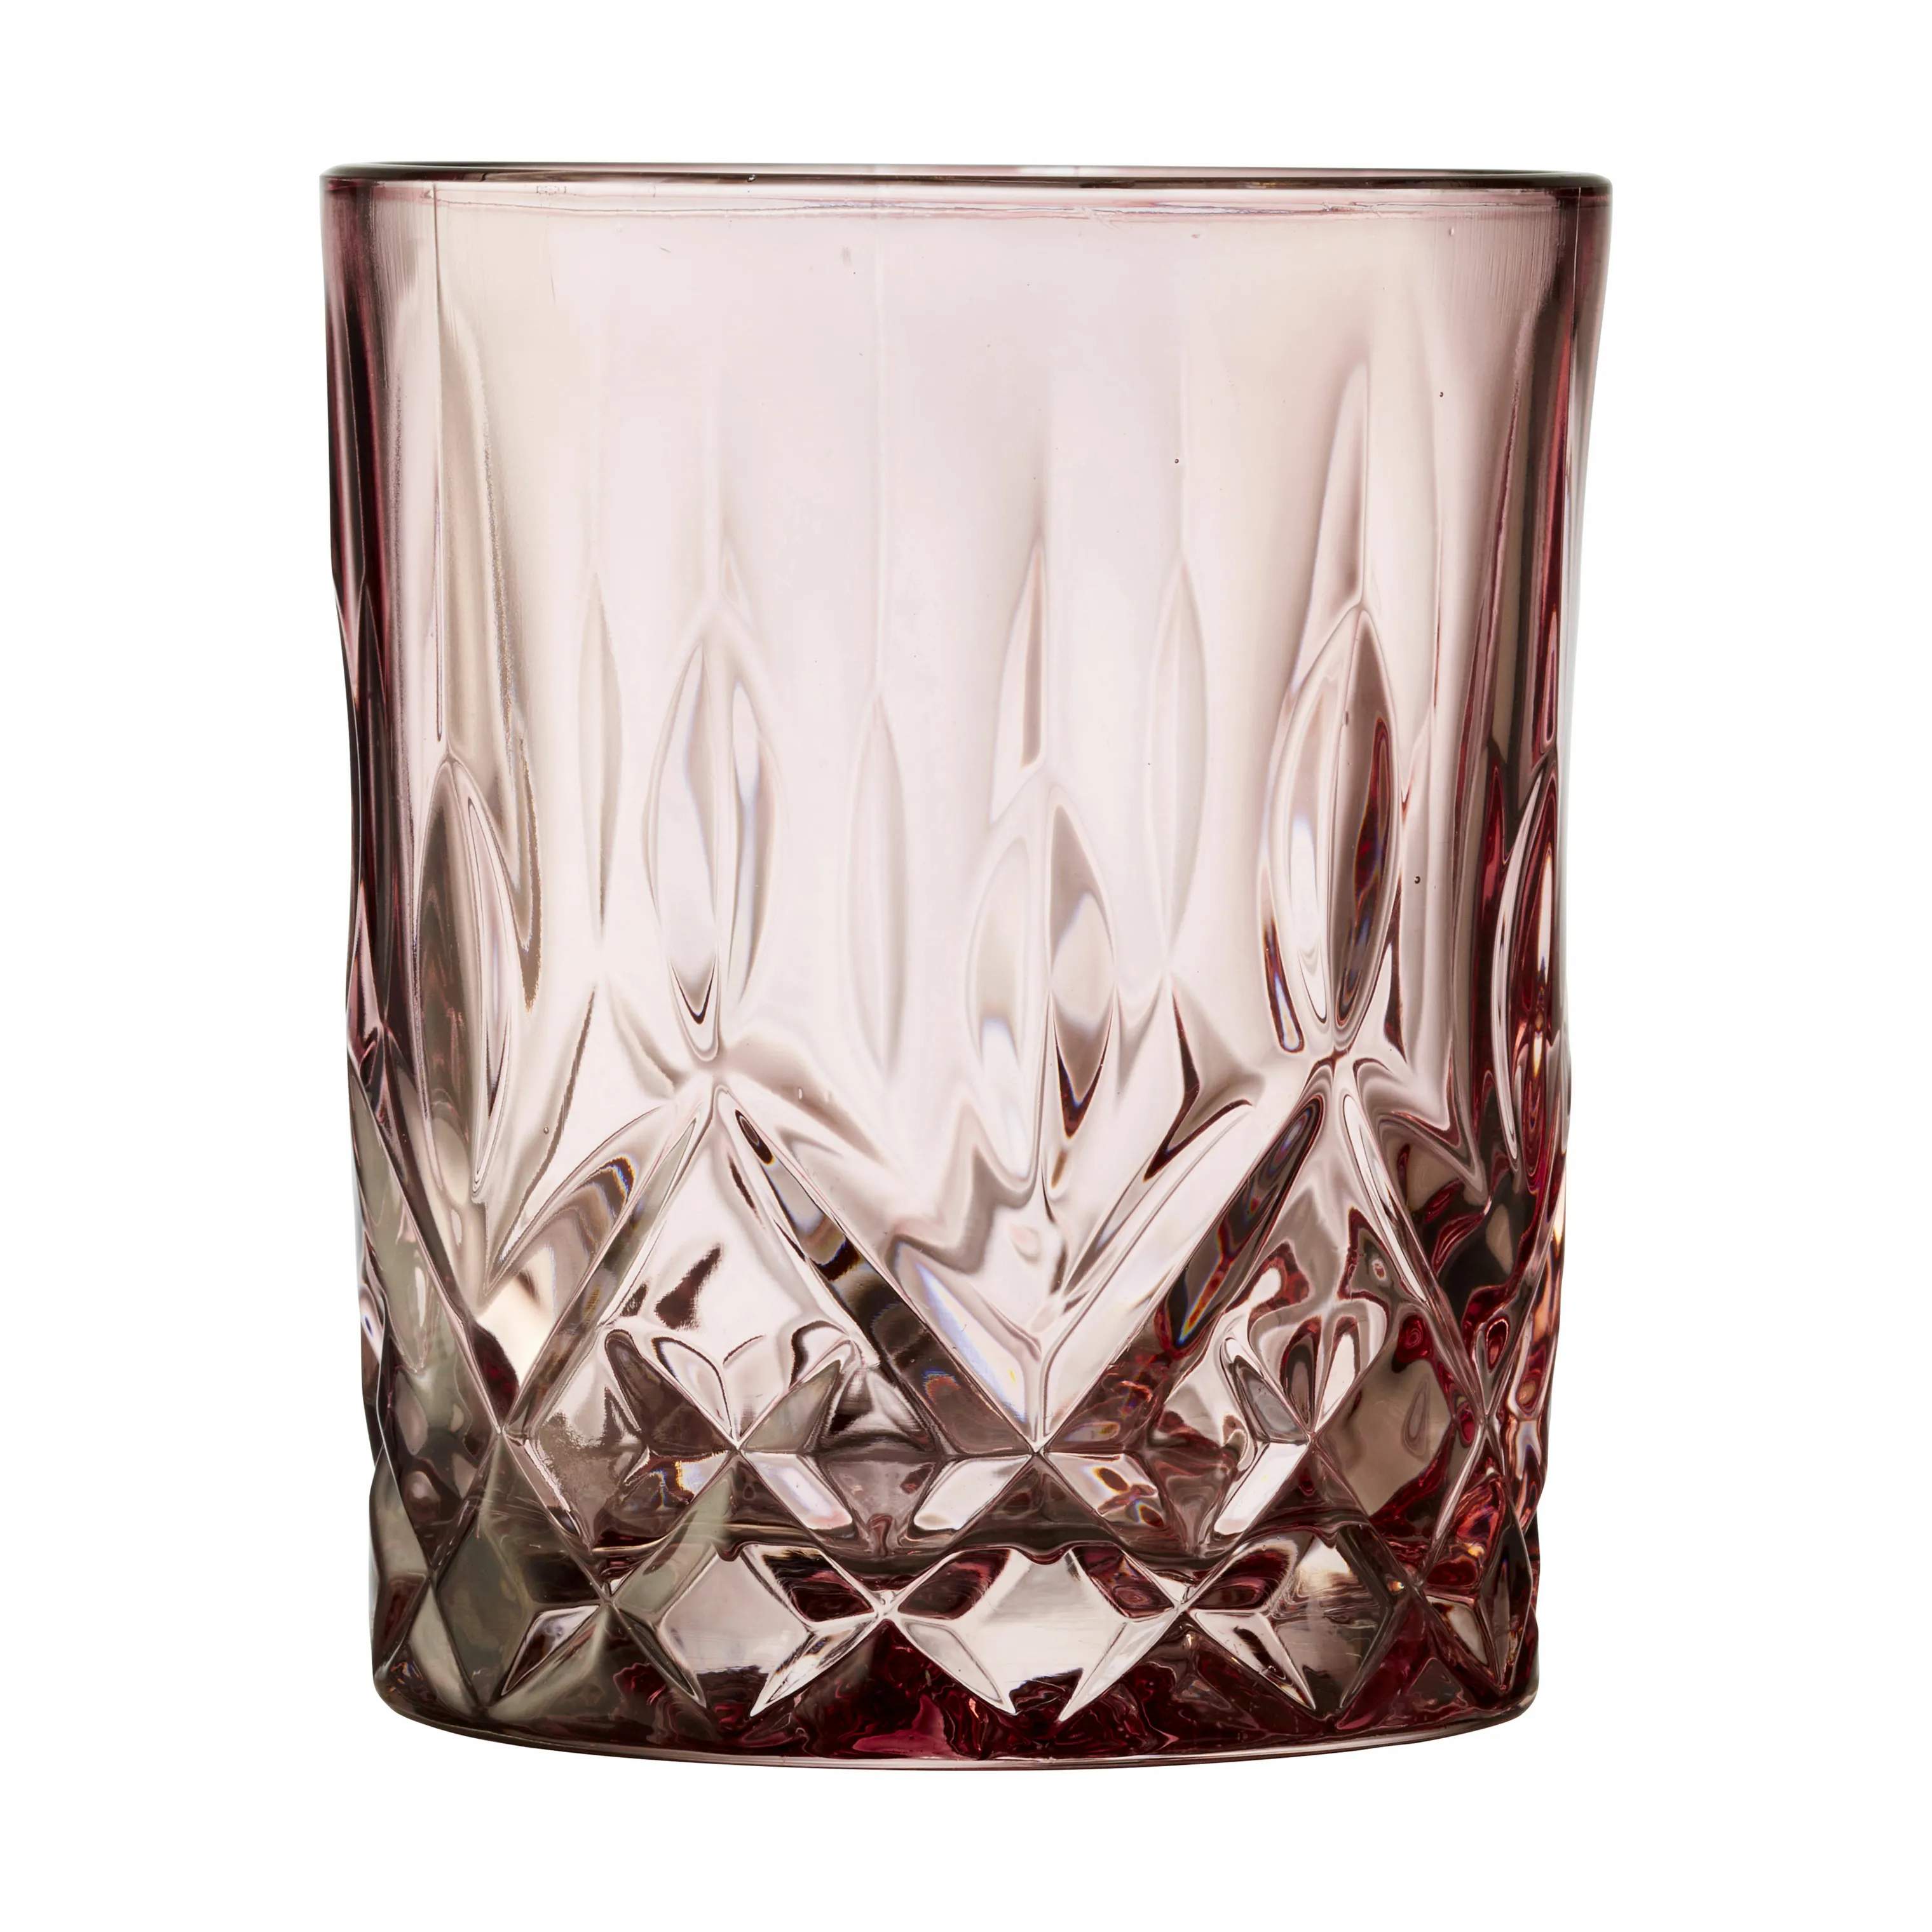 Sorrento Whiskyglas - 4 stk., pink, large